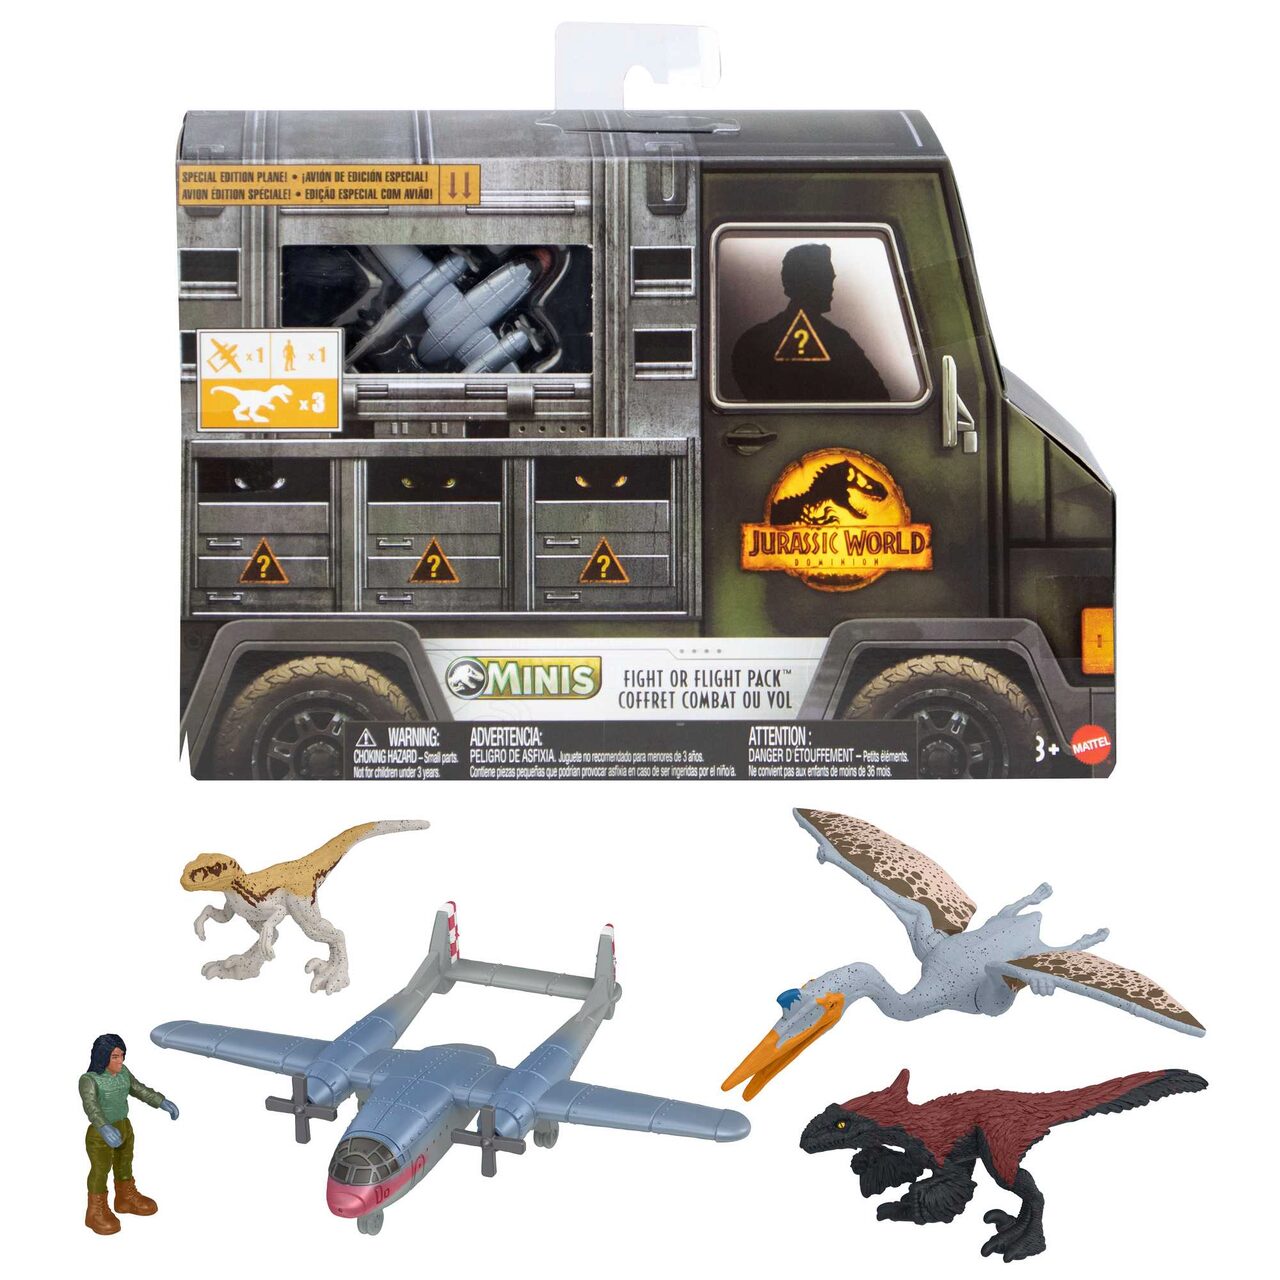 MATTEL - GWP70 -Jurassic World Minis Figuren Multipack mit 5 Minifiguren